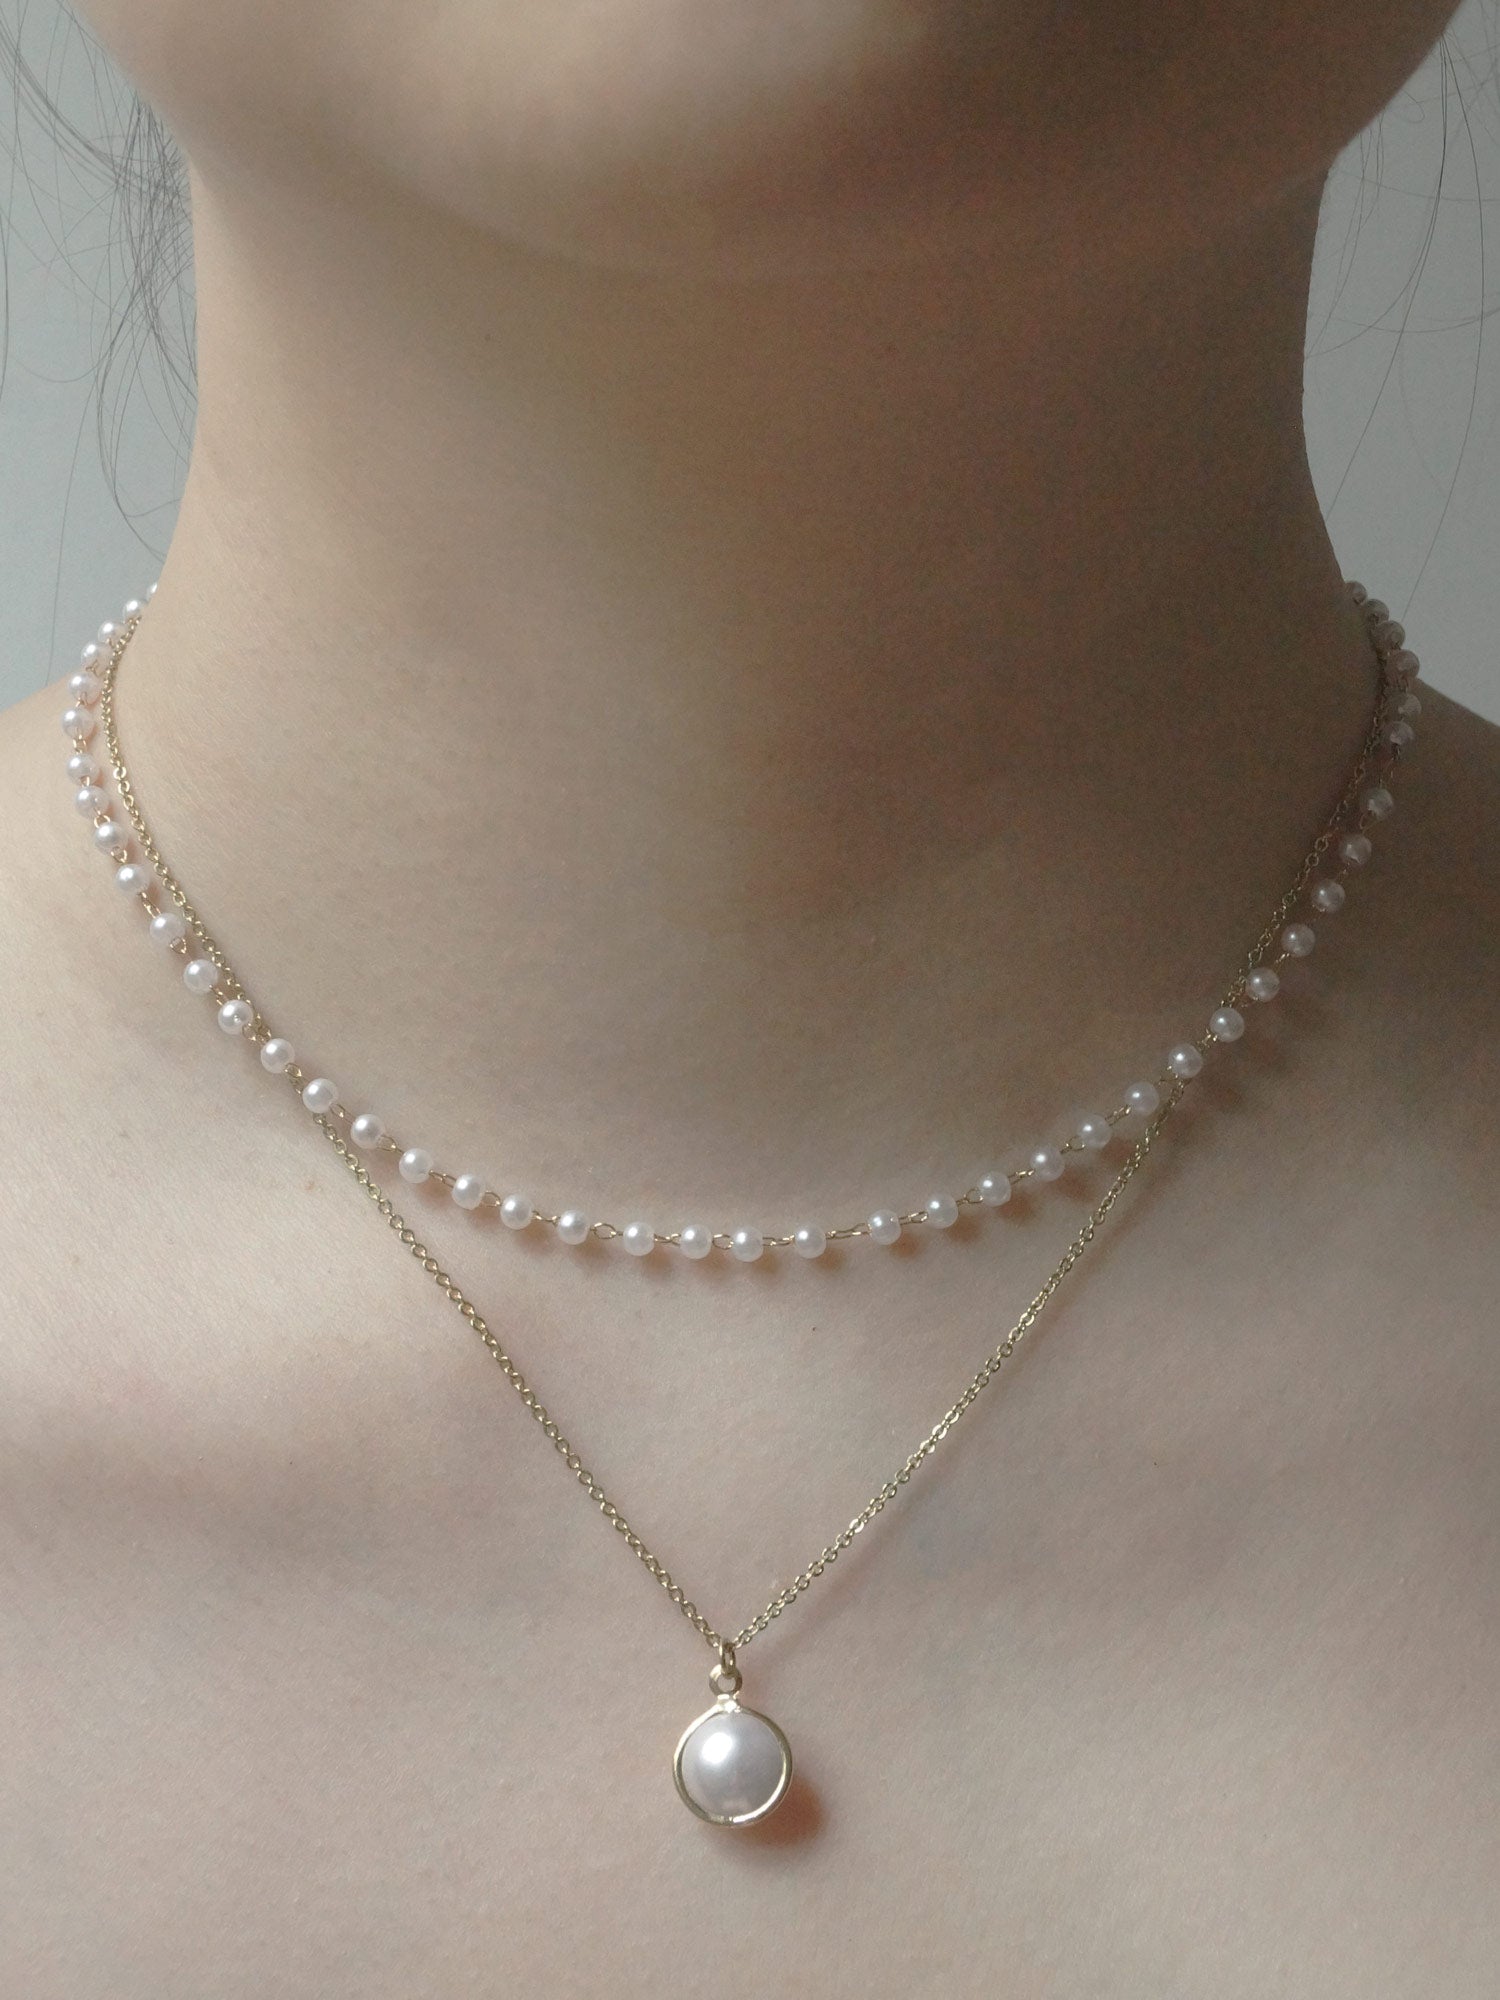 Collier superposé de perles